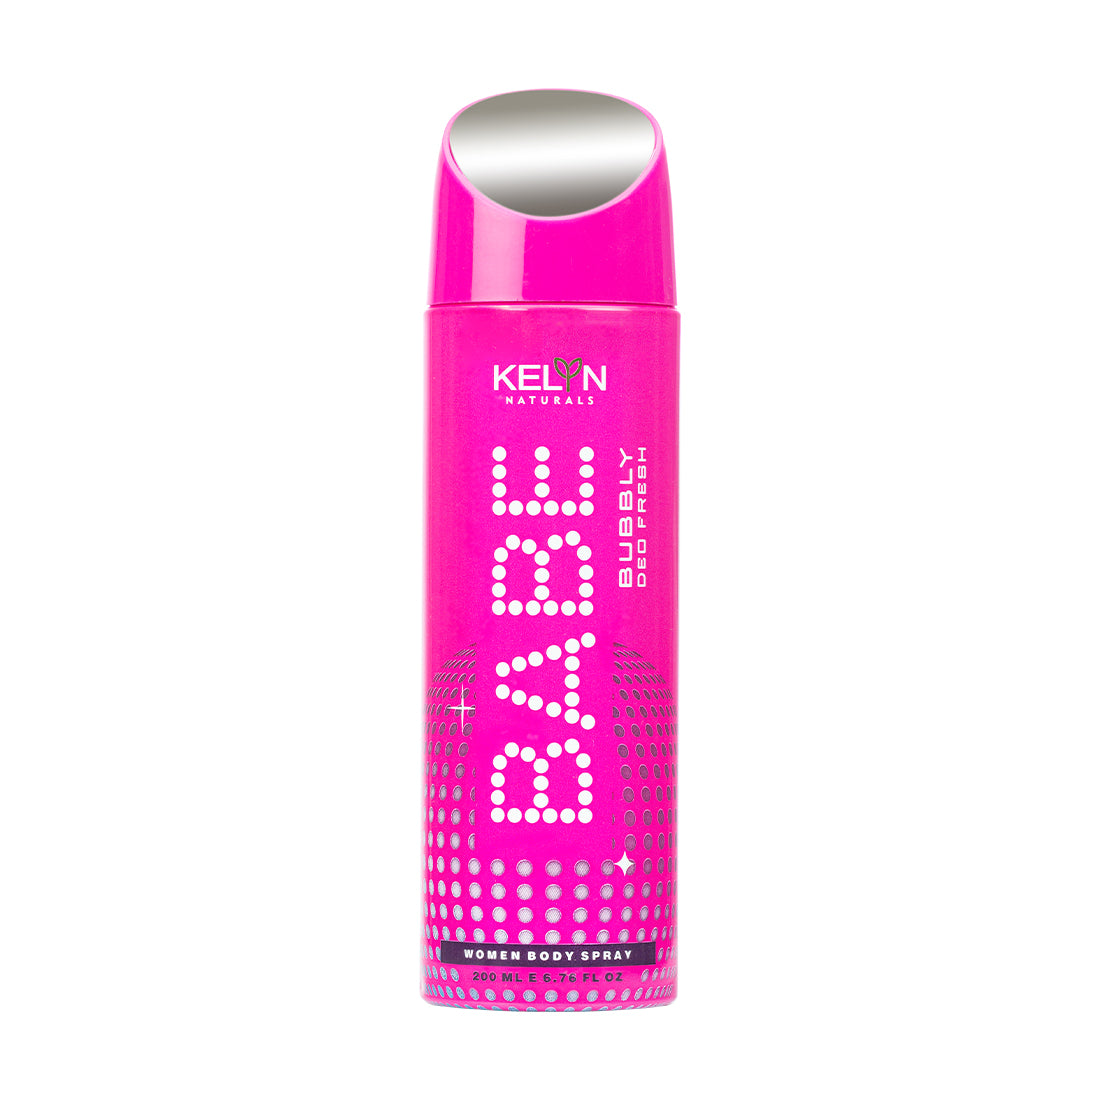 Babe Deodorant for Women Body Spray, 200 ml